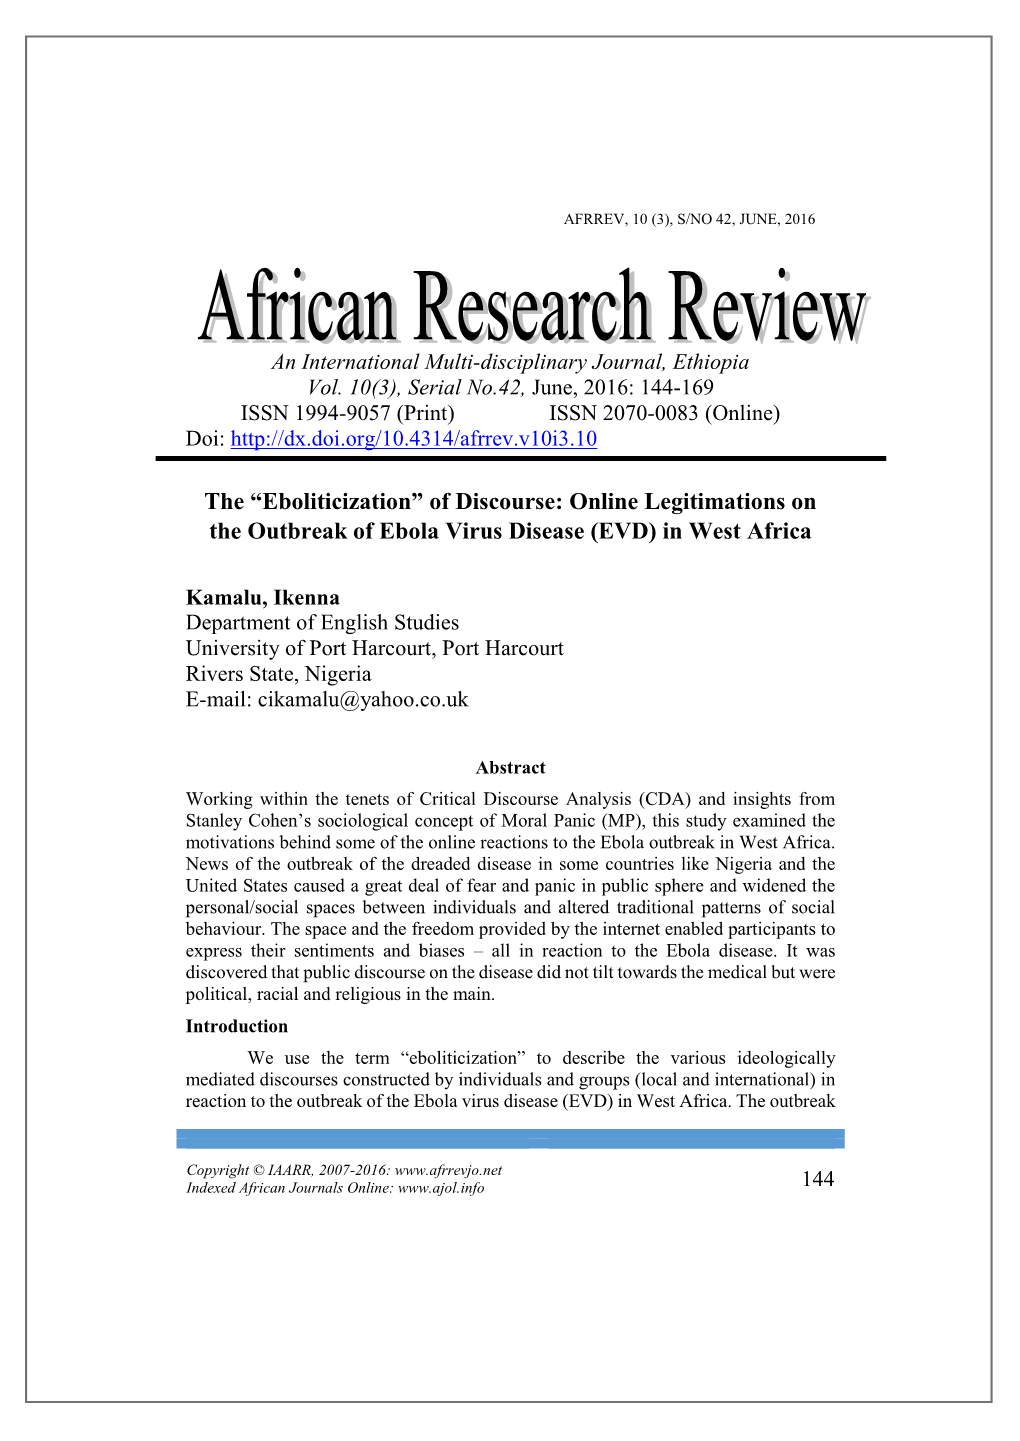 Online Legitimations on the Outbreak of Ebola Virus Disease (EVD) in West Africa